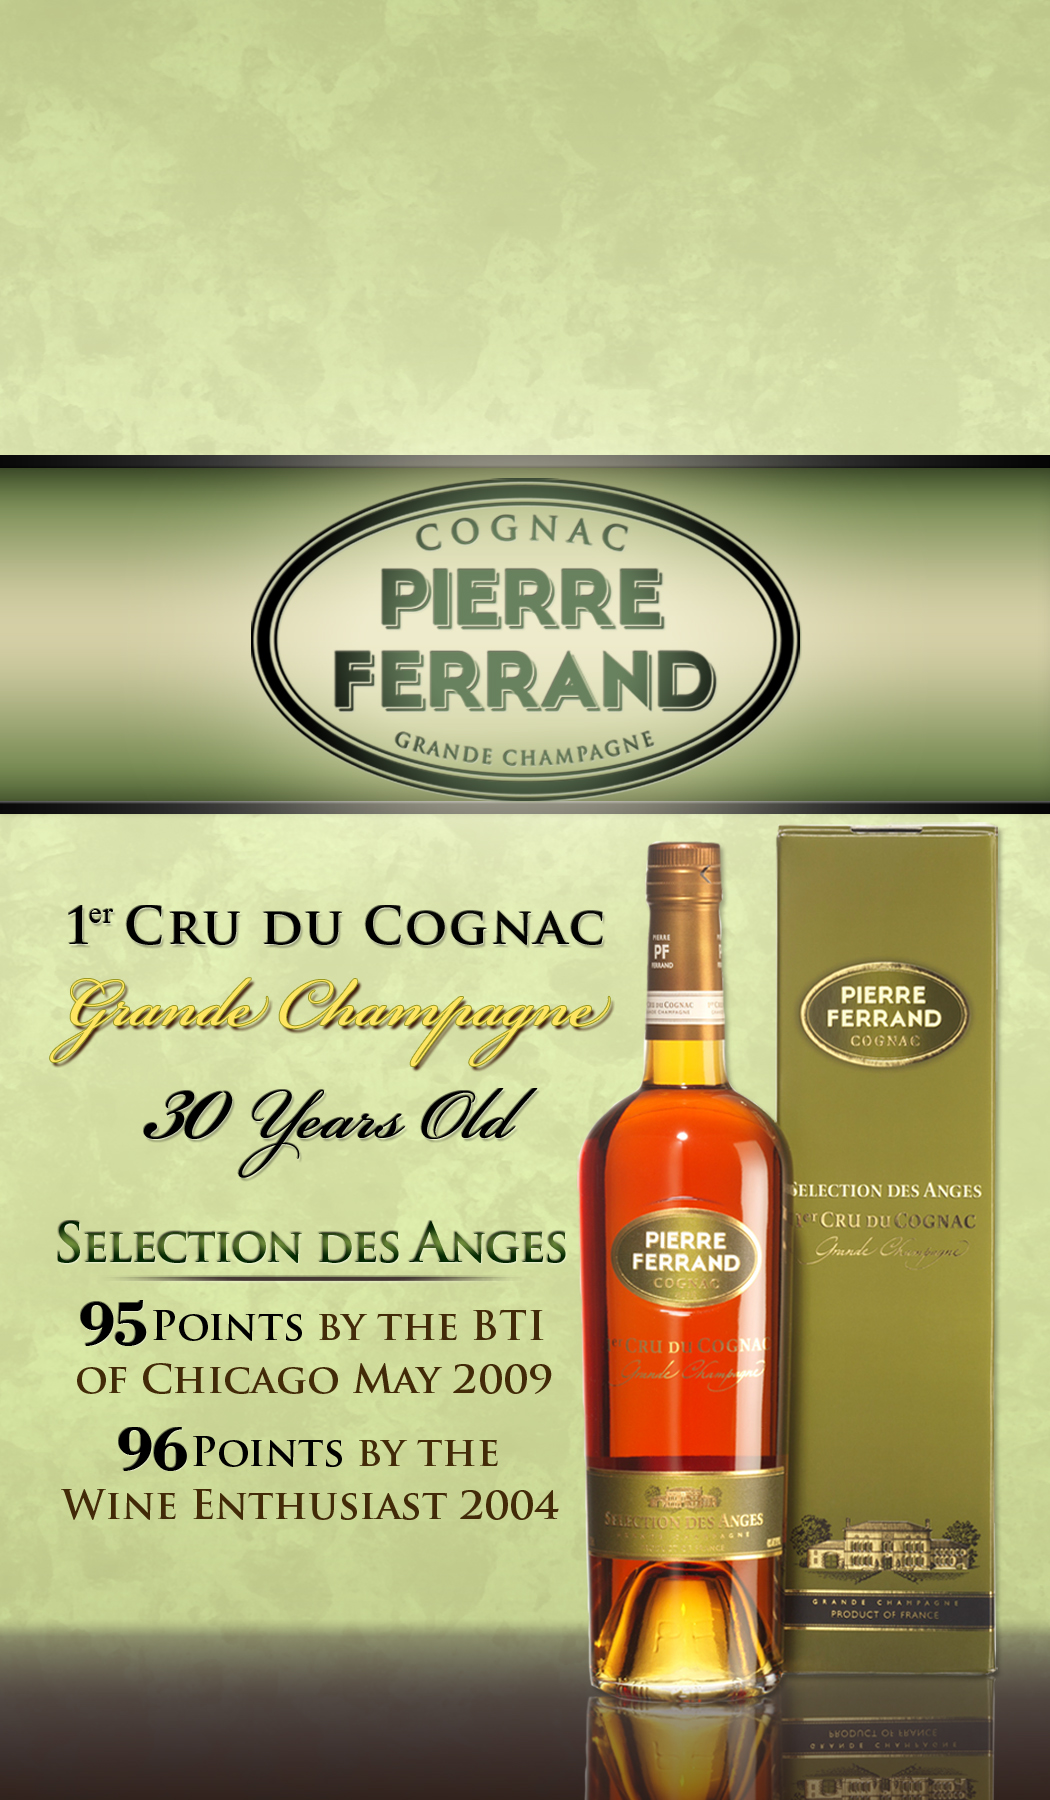 Pierre Ferrand Cognac Shelf Talkers Consistent Design